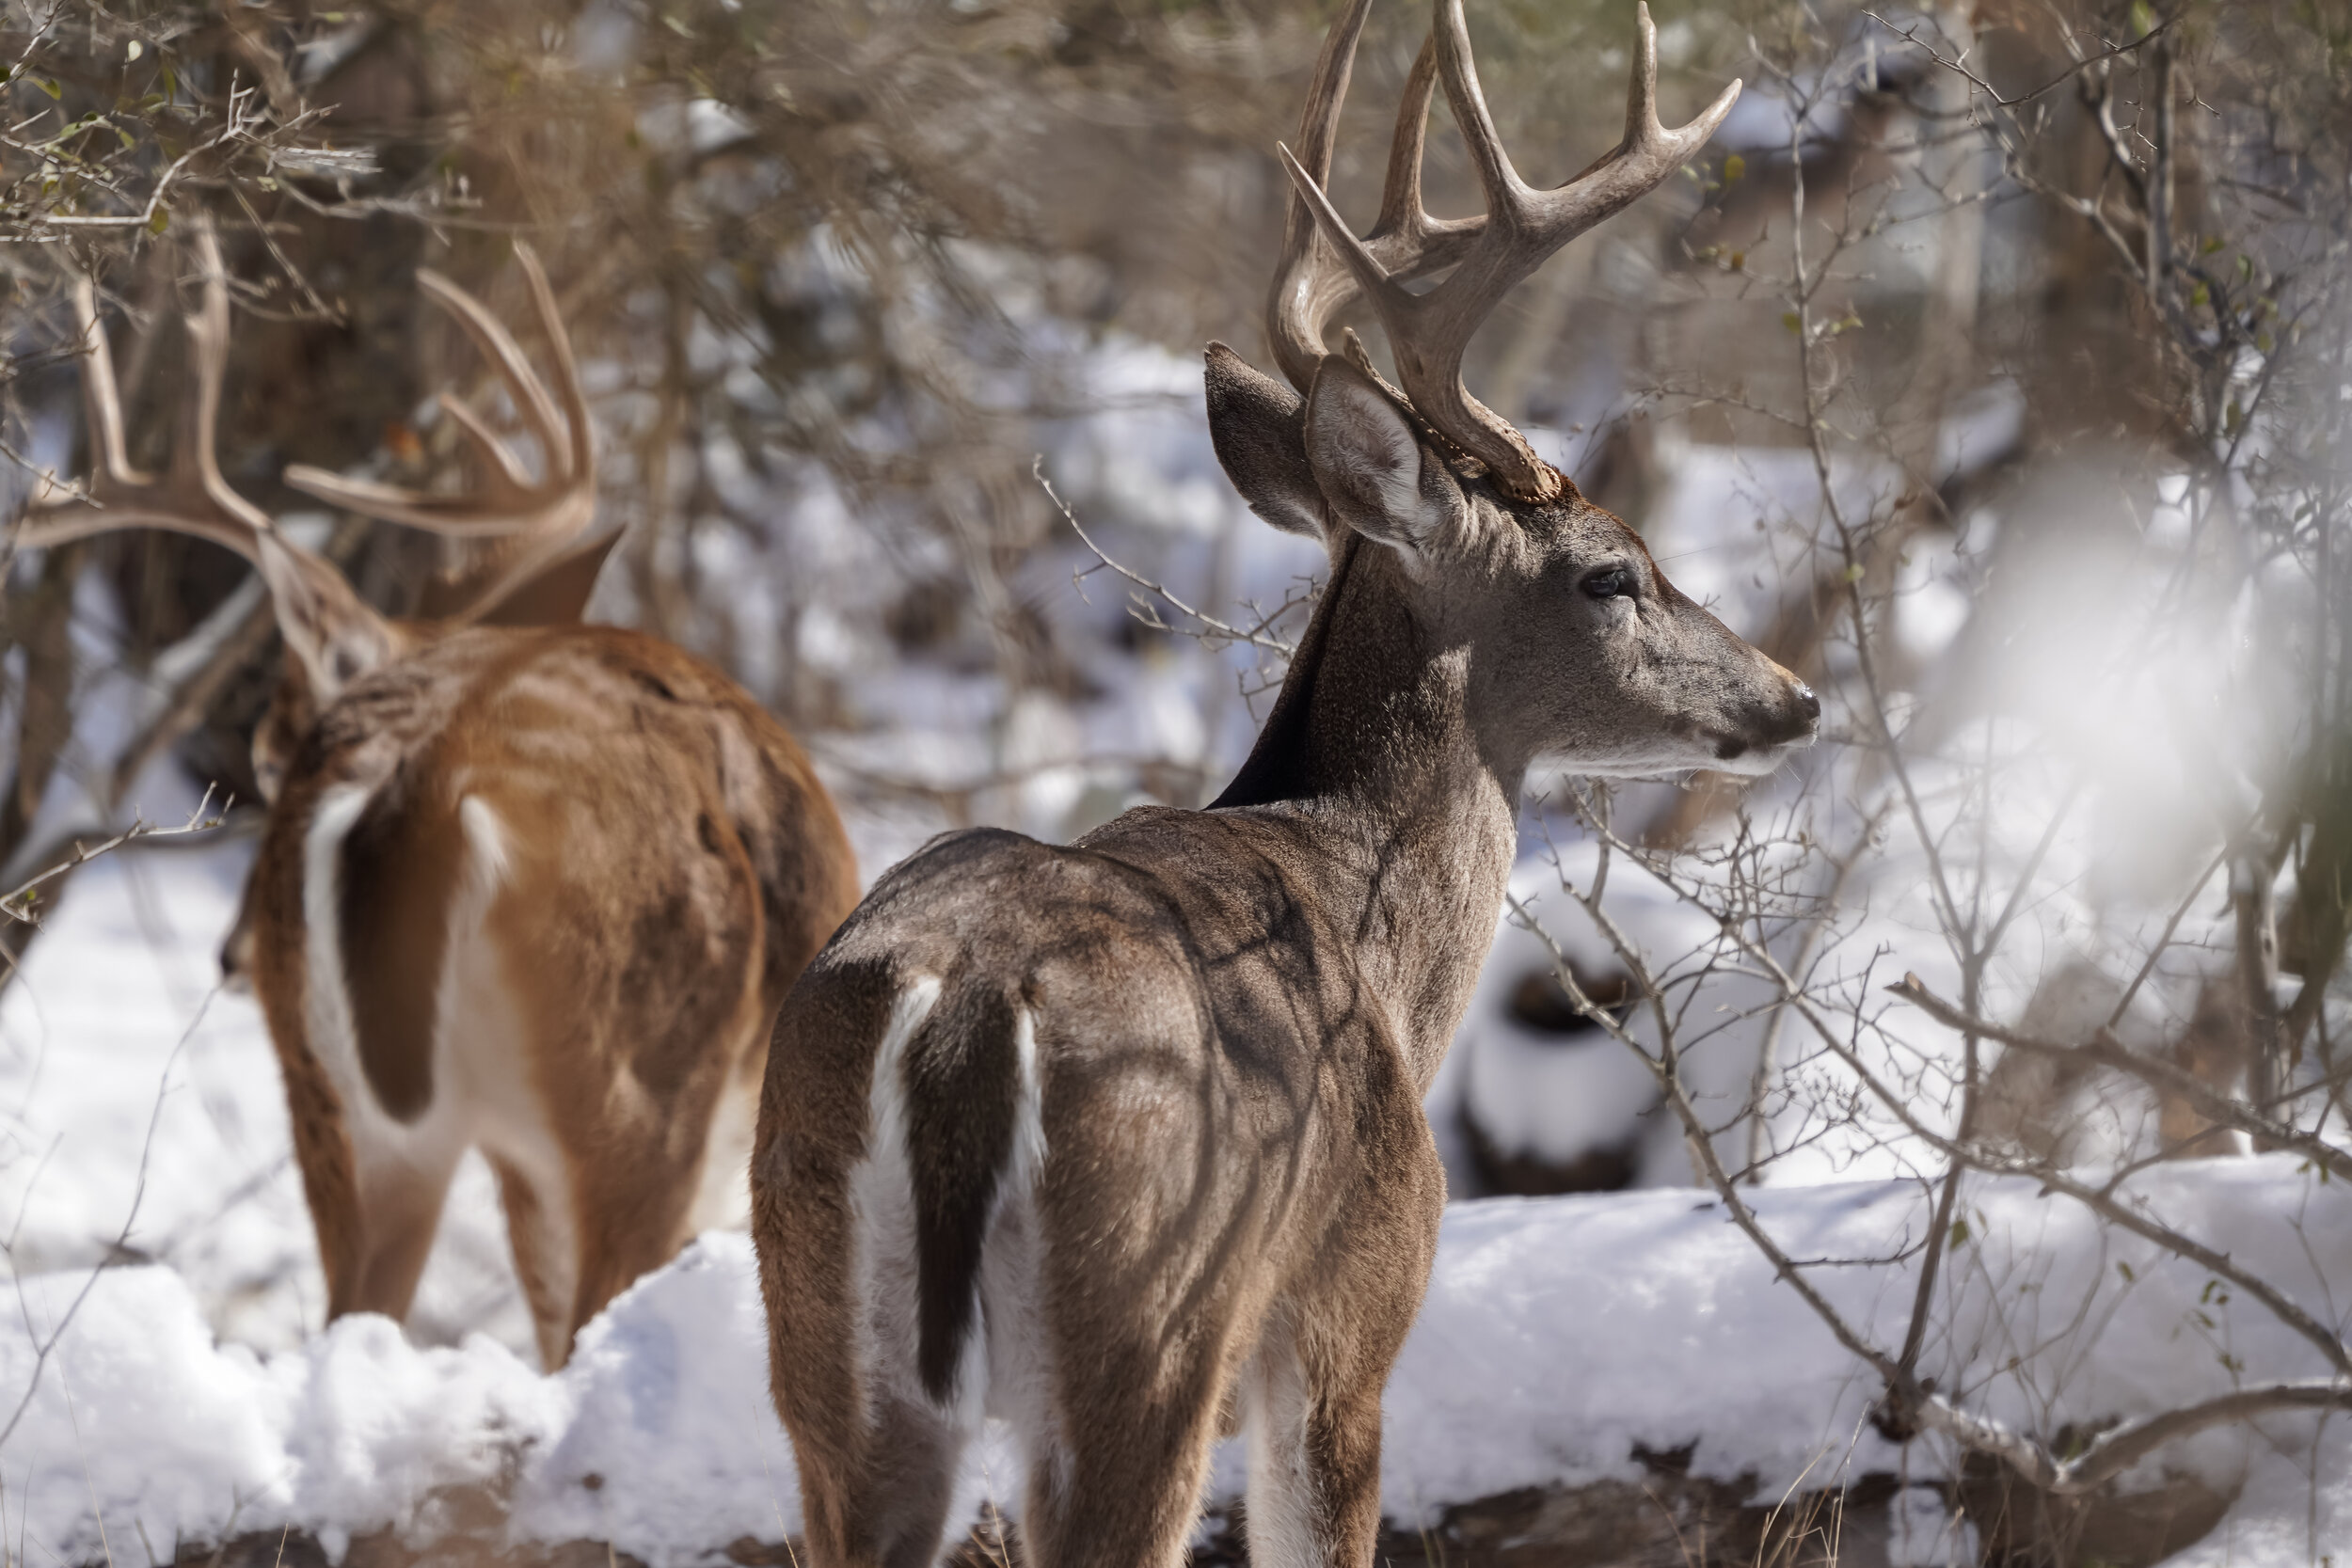 Bucks in snow